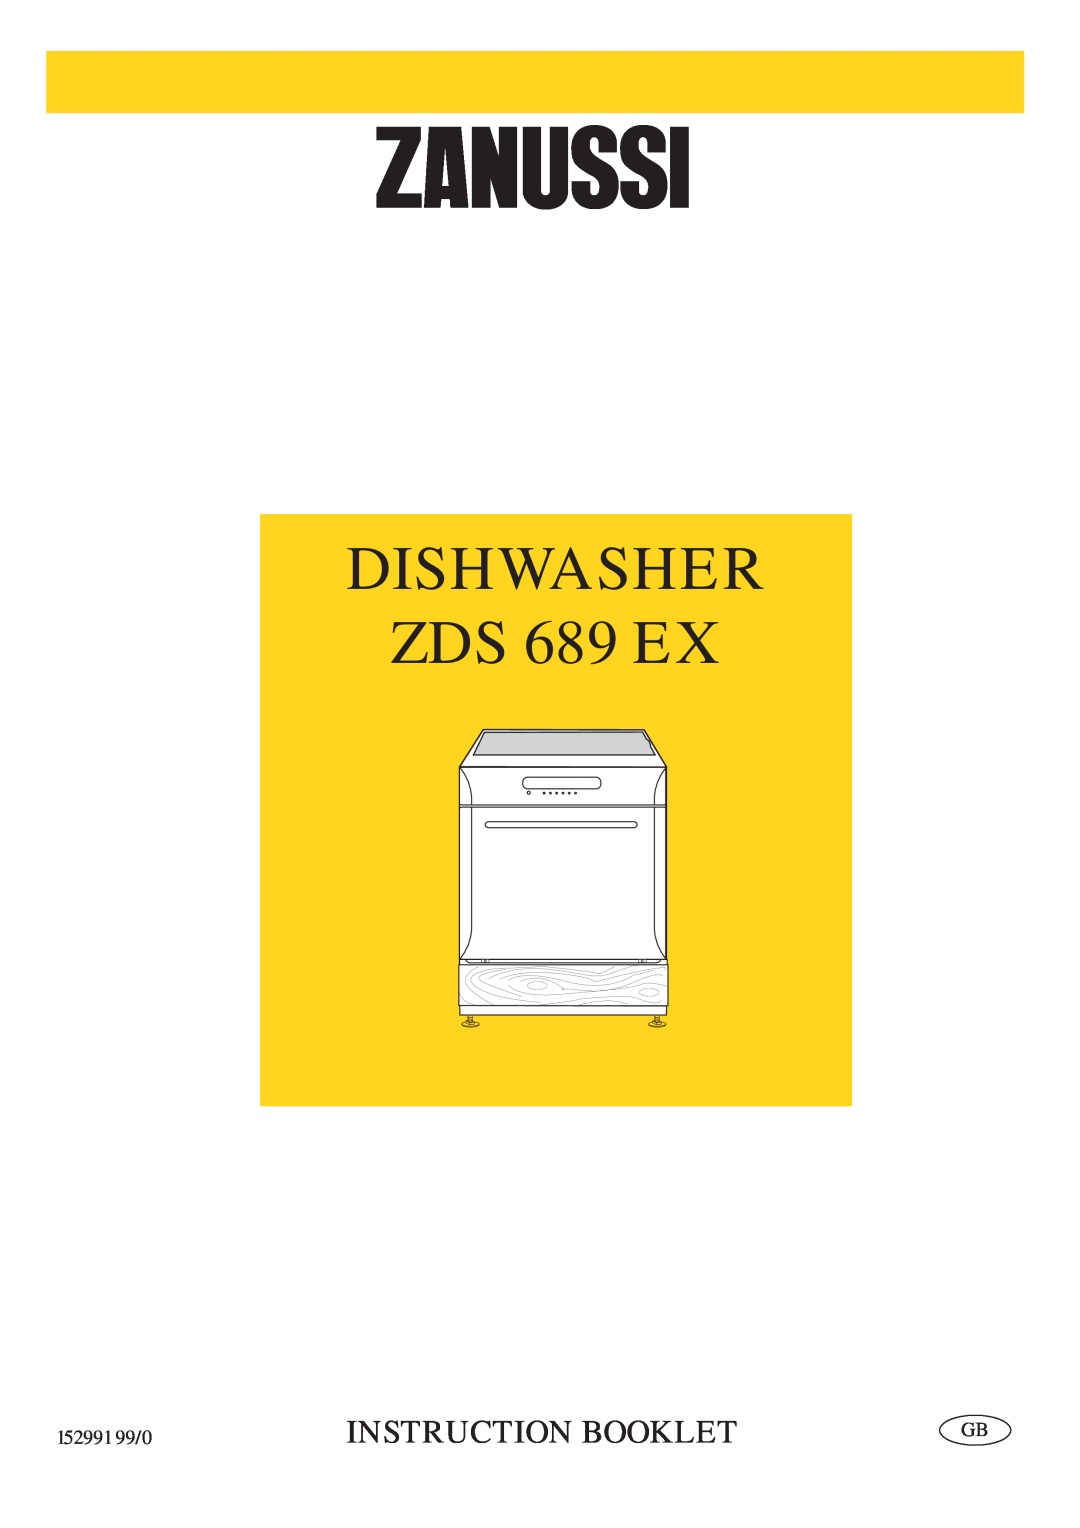 Zanussi manual DISHWASHER ZDS 689 EX, Instruction Booklet 